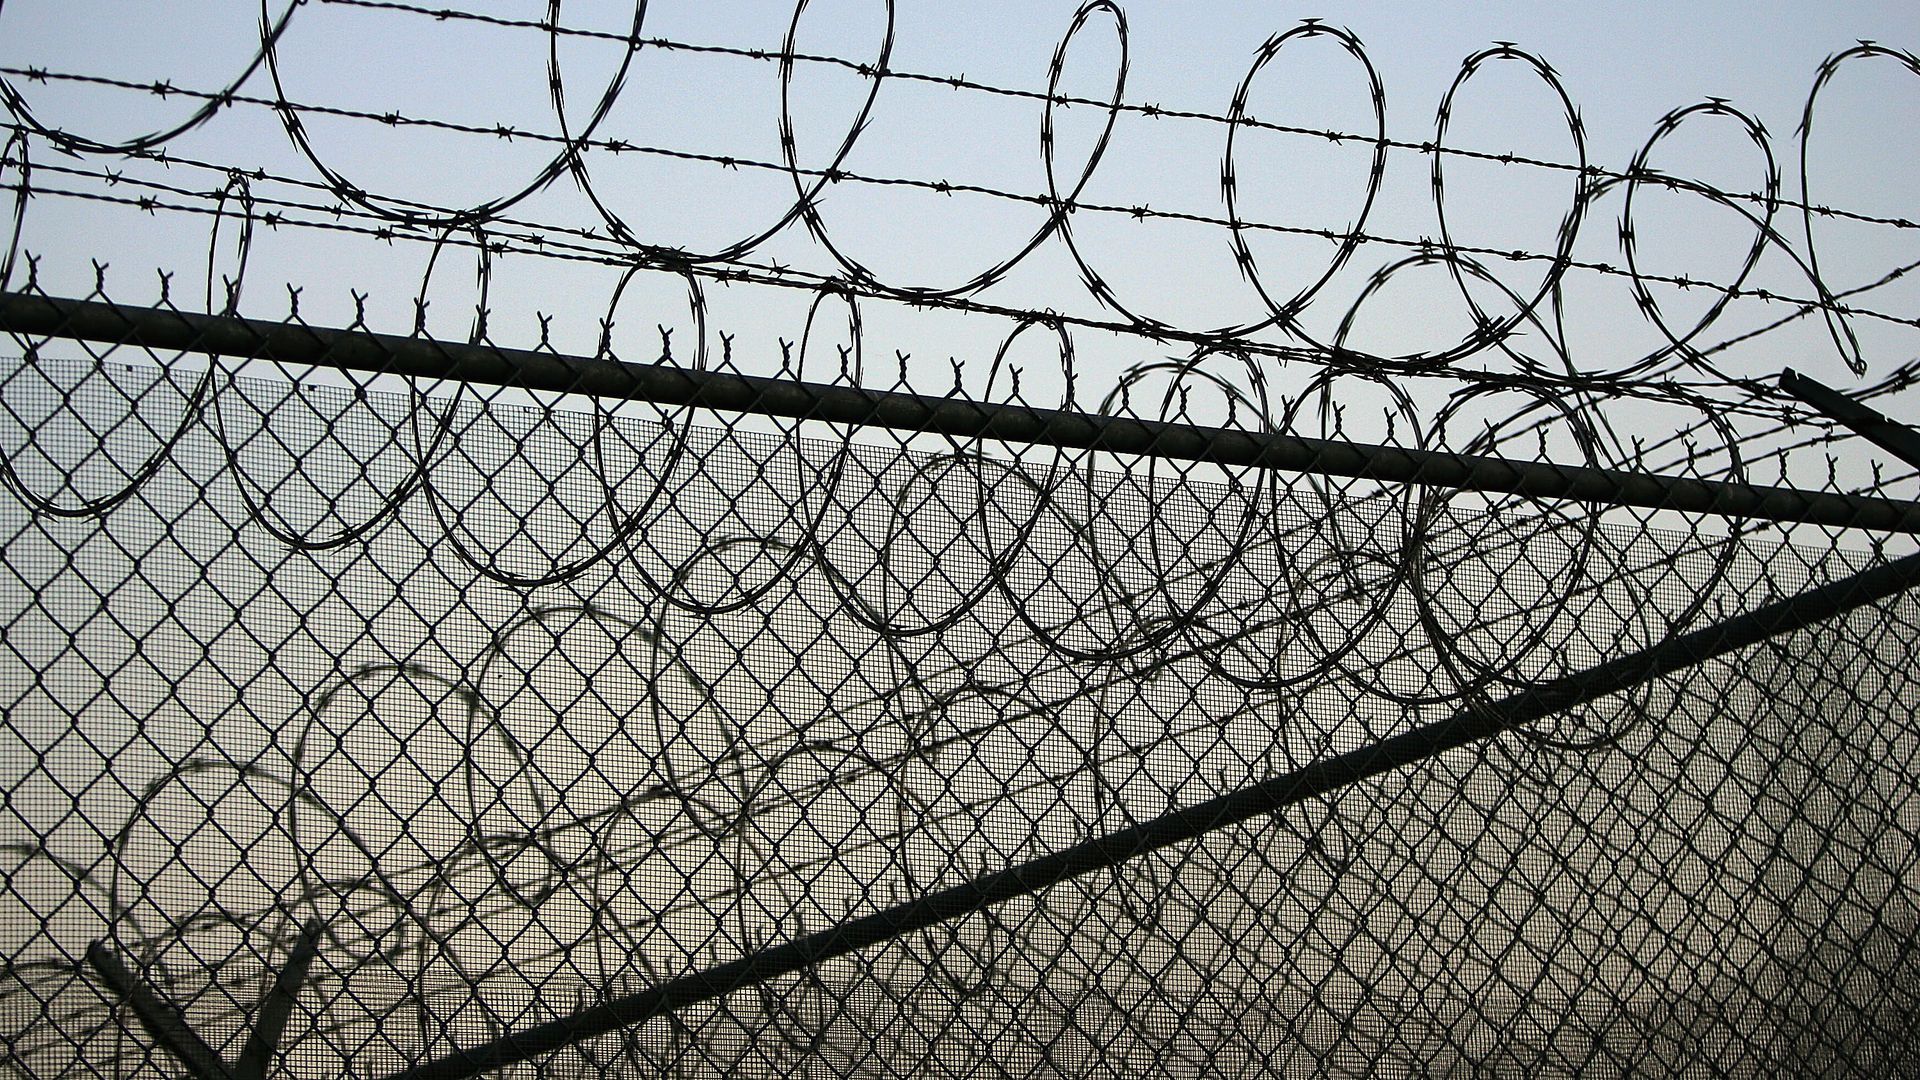 The Santa Barbara County Detention and Correctional Facility.